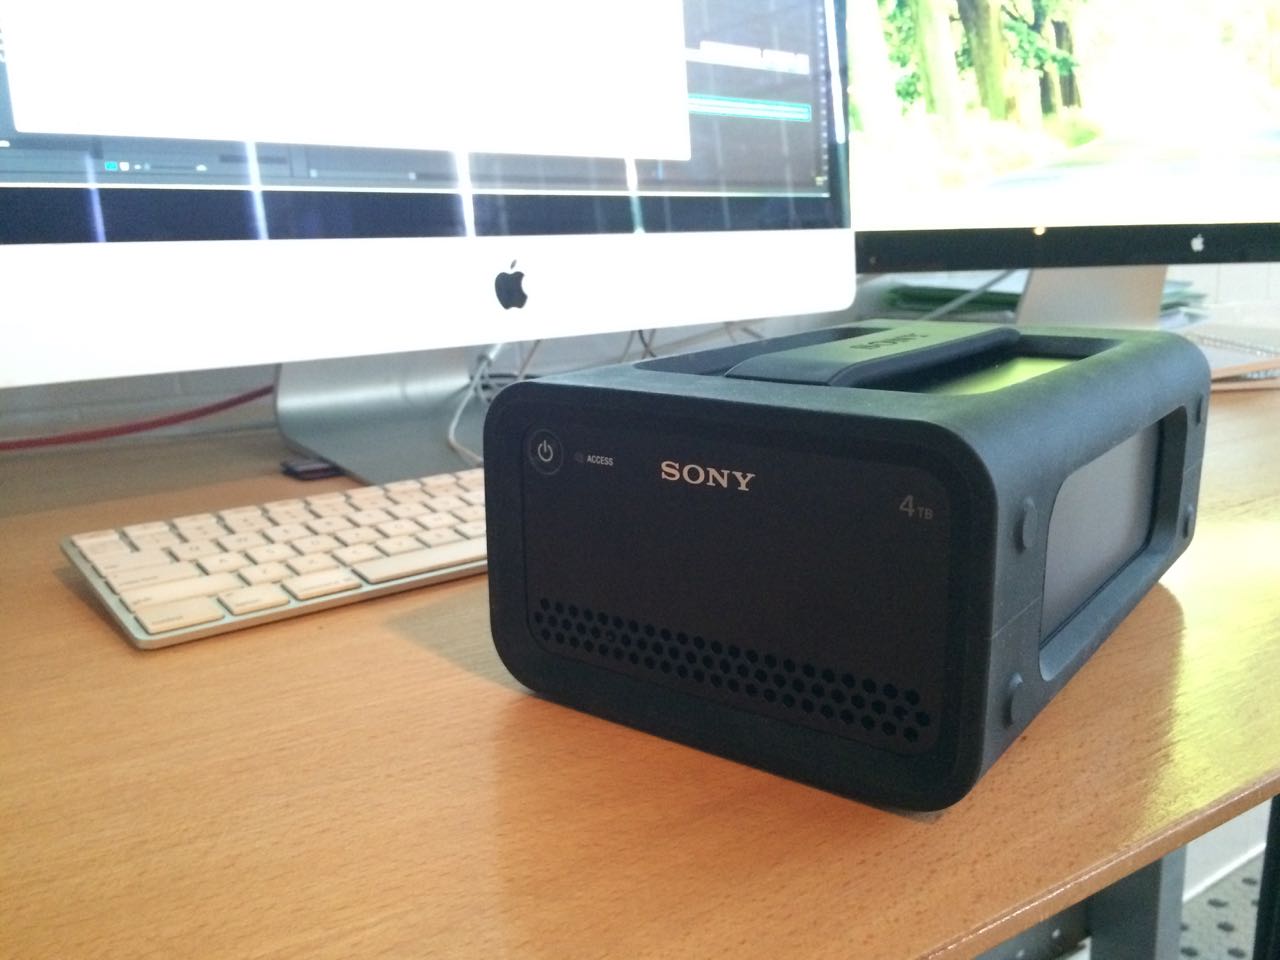 Review: Sony PSZ-RA4T hard drive - A very portable rugged RAID 9